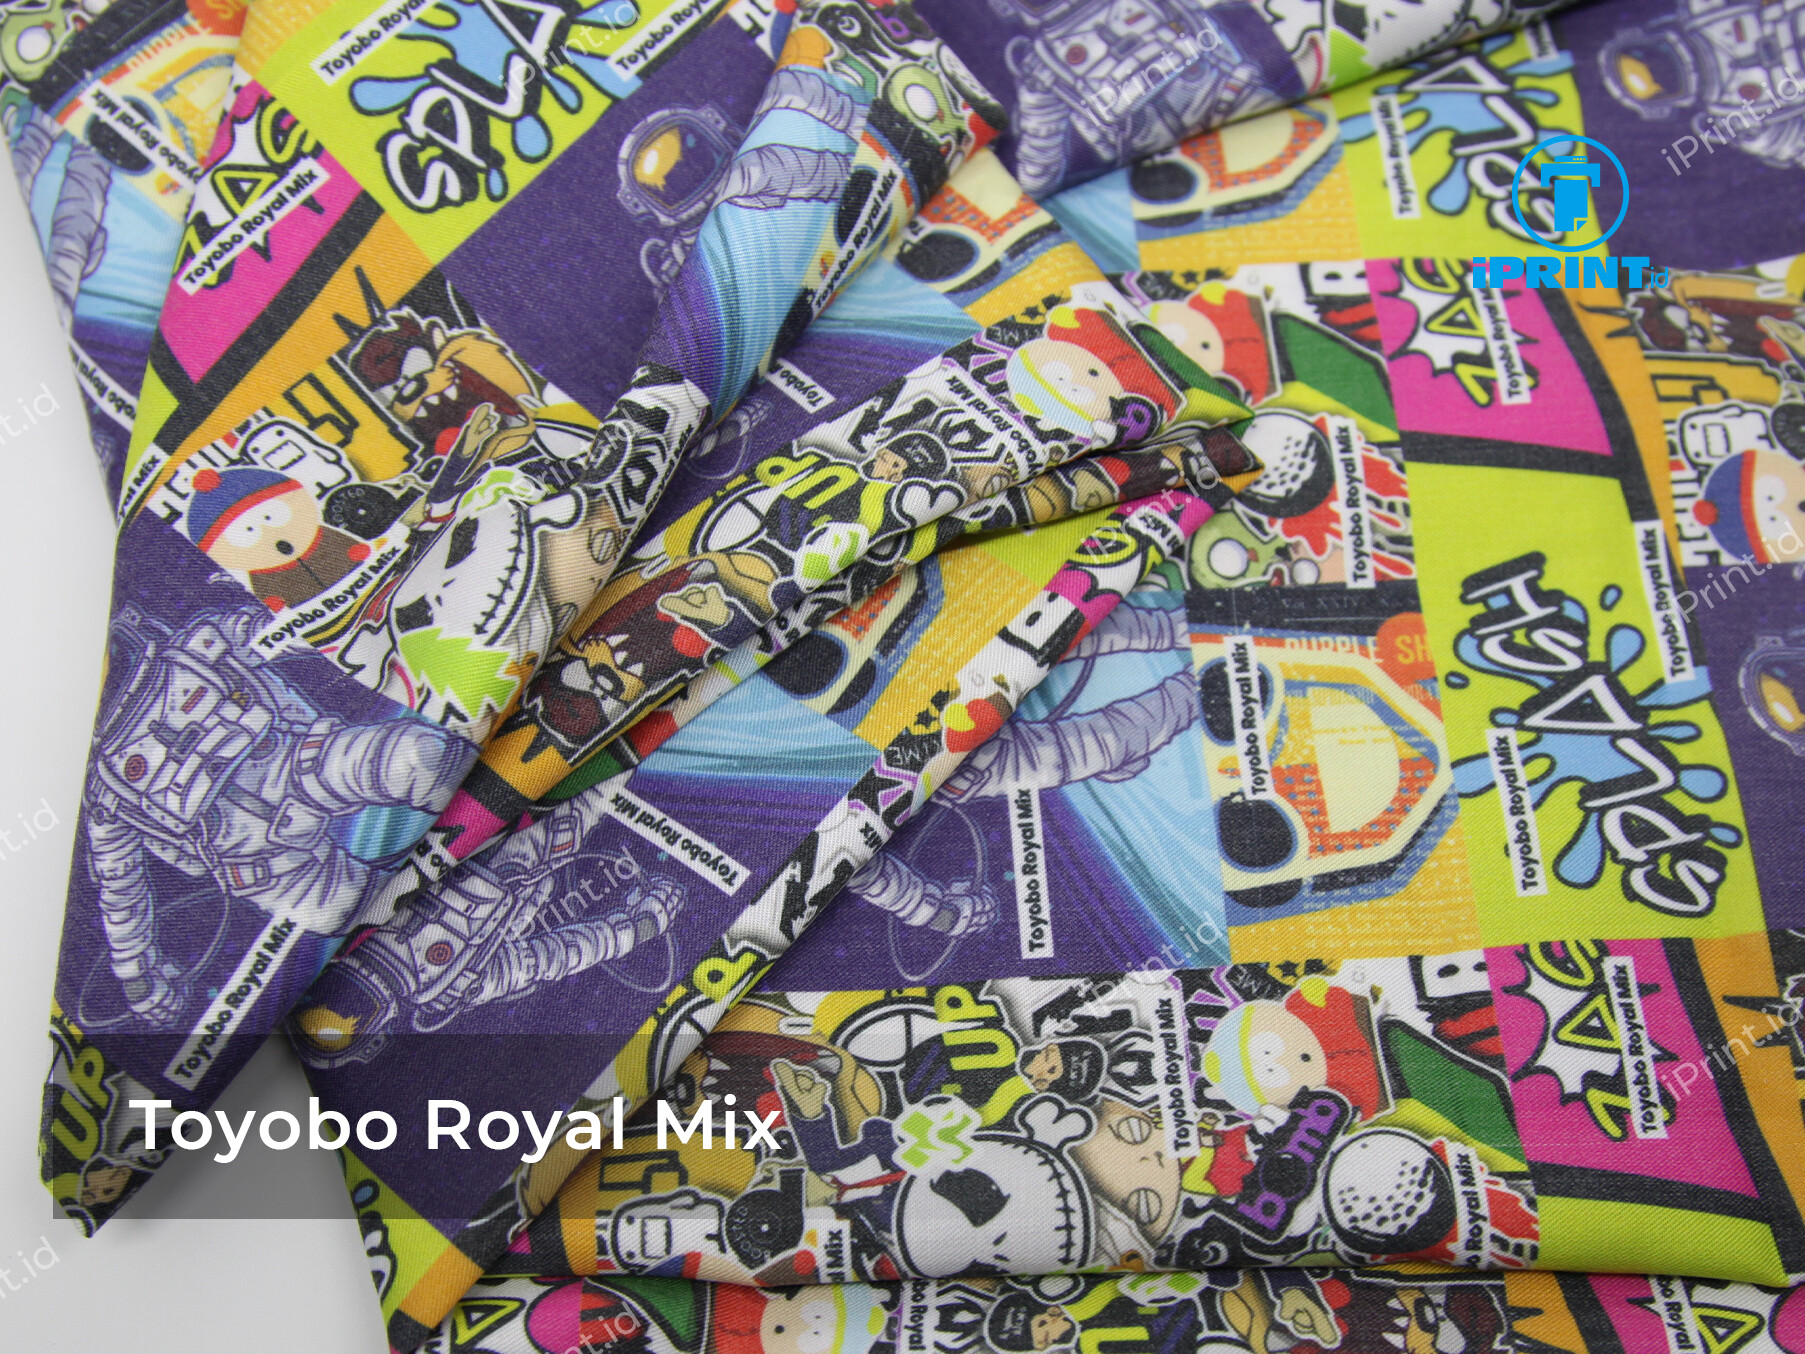 Toyobo Royal Mix